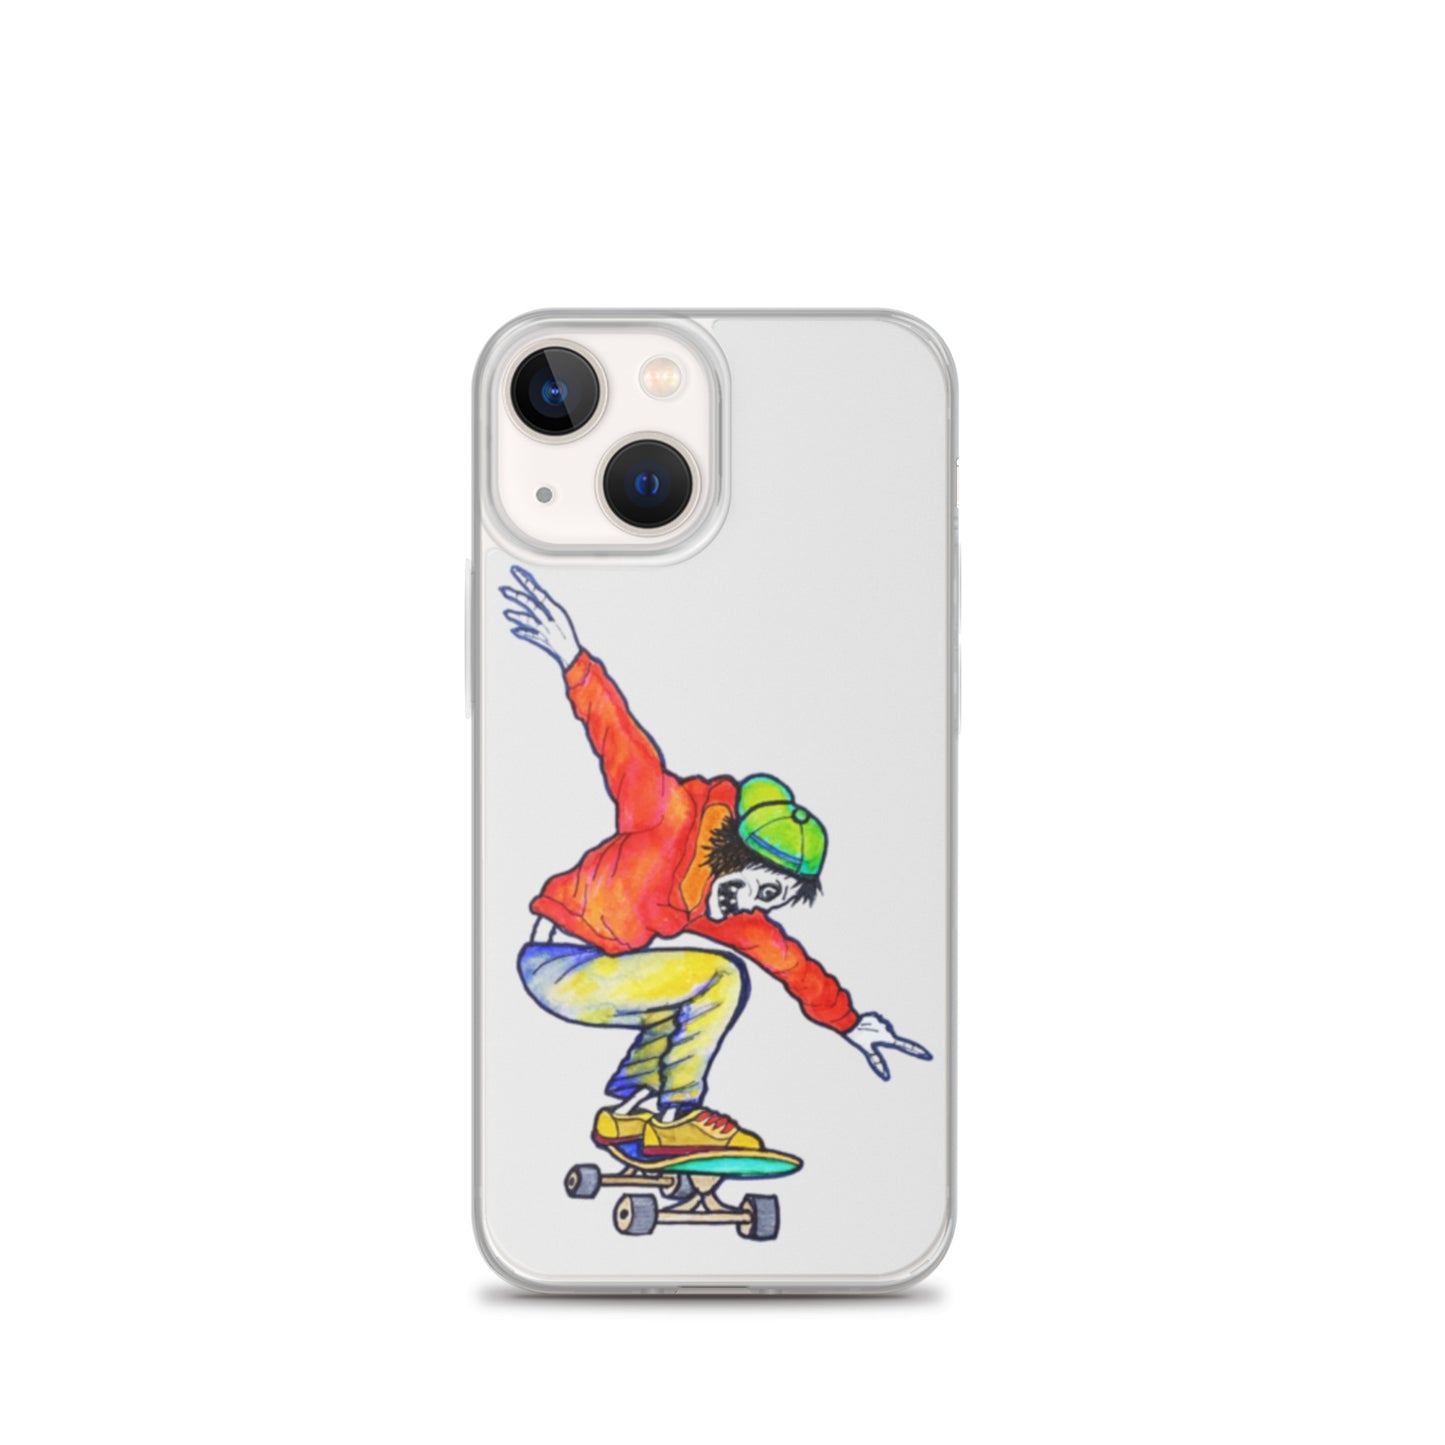 Skaterbones Down iPhone Case